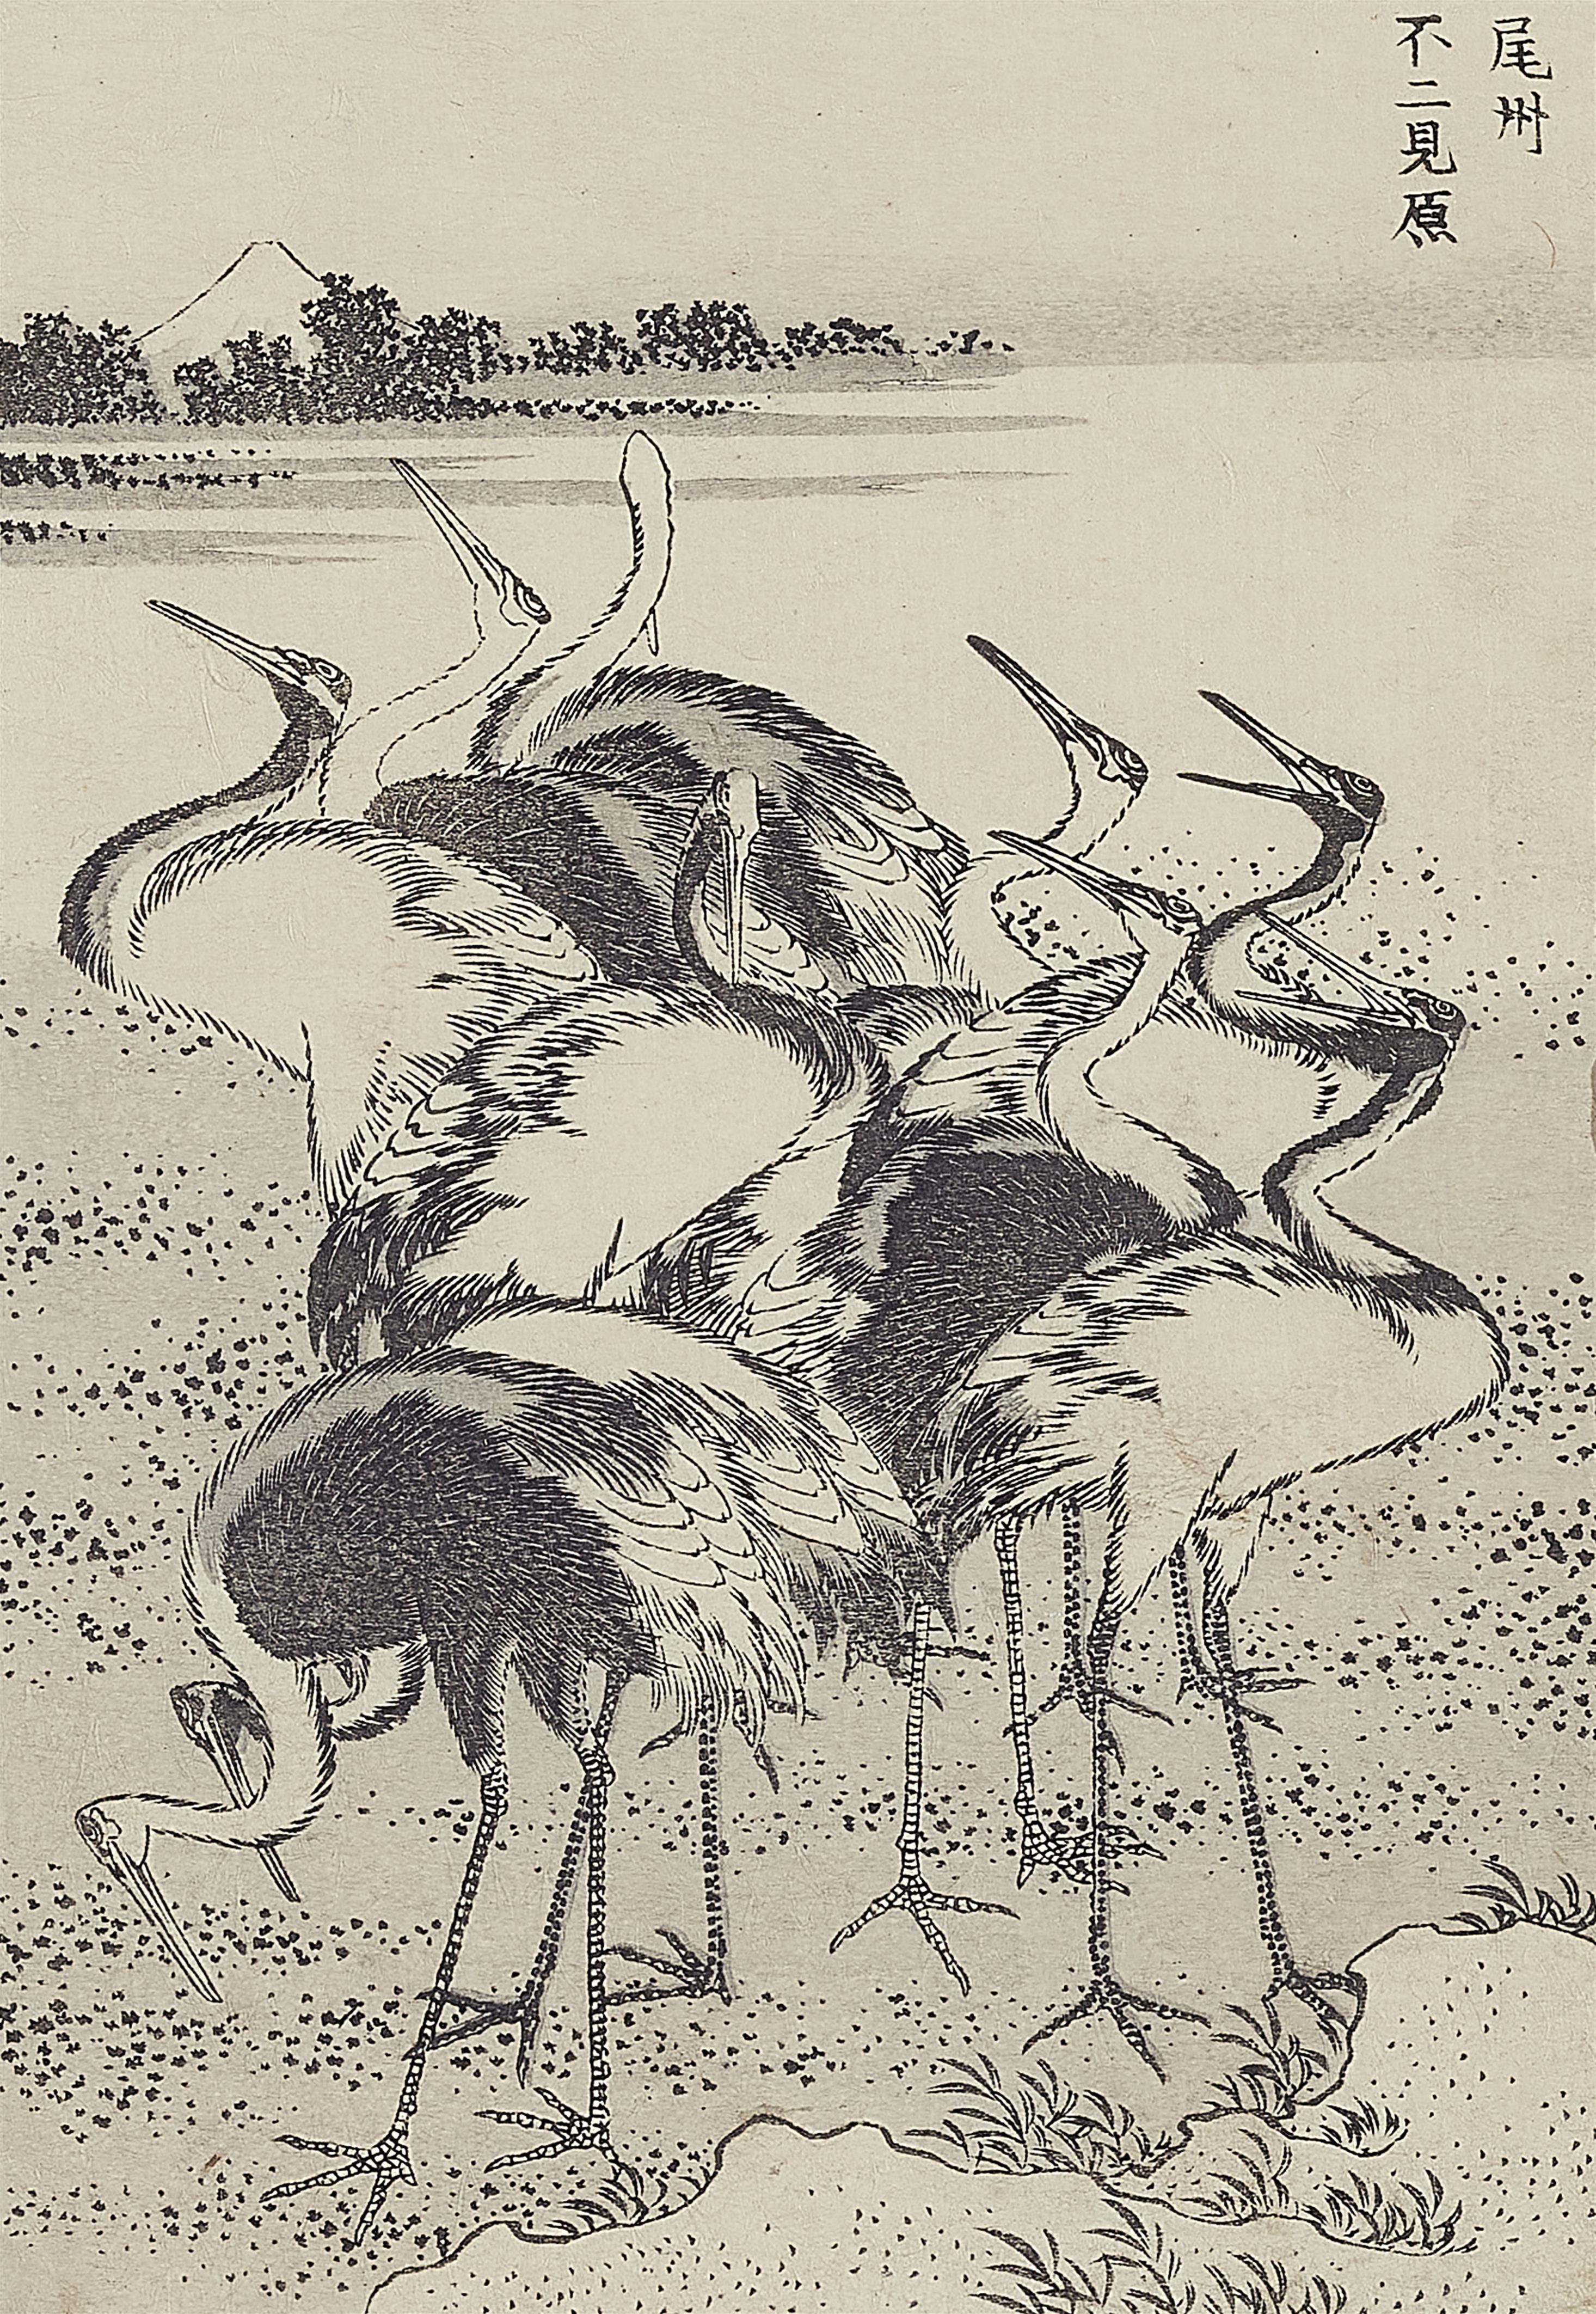 Katsushika Hokusai - Black and white illustrations from the album Fugaku hyakkei - image-20